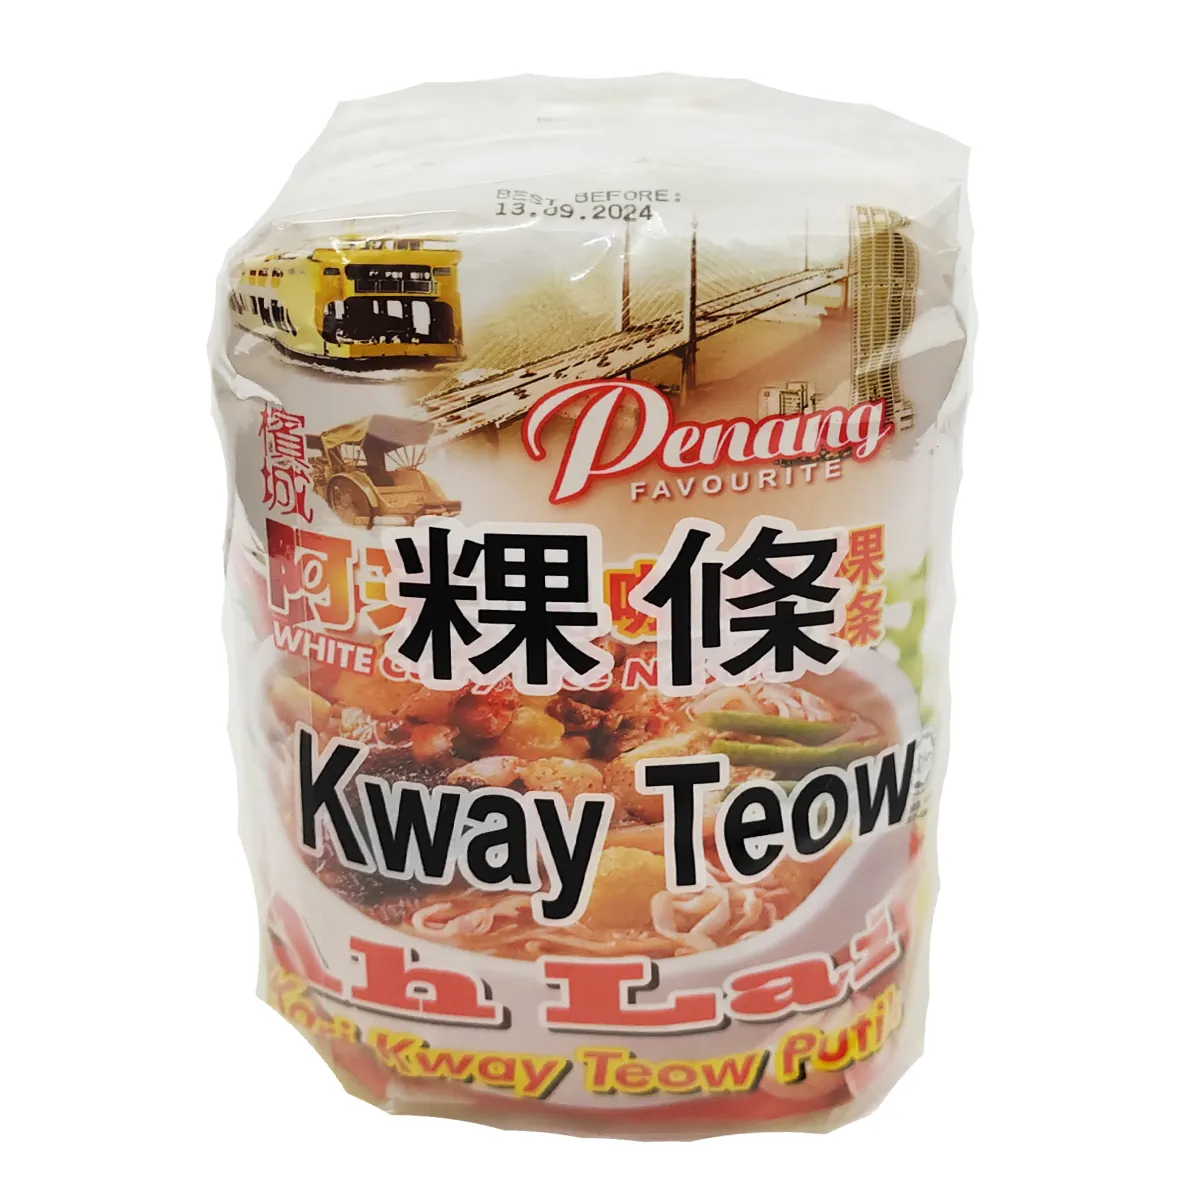 पेनांग आह लाइ सफेद करी Kway Teow चावल नूडल तुरंत नूडल में किए गए मलेशिया पेनांग स्वाद नूडल (95g x 4 पैक x 12 बैग)